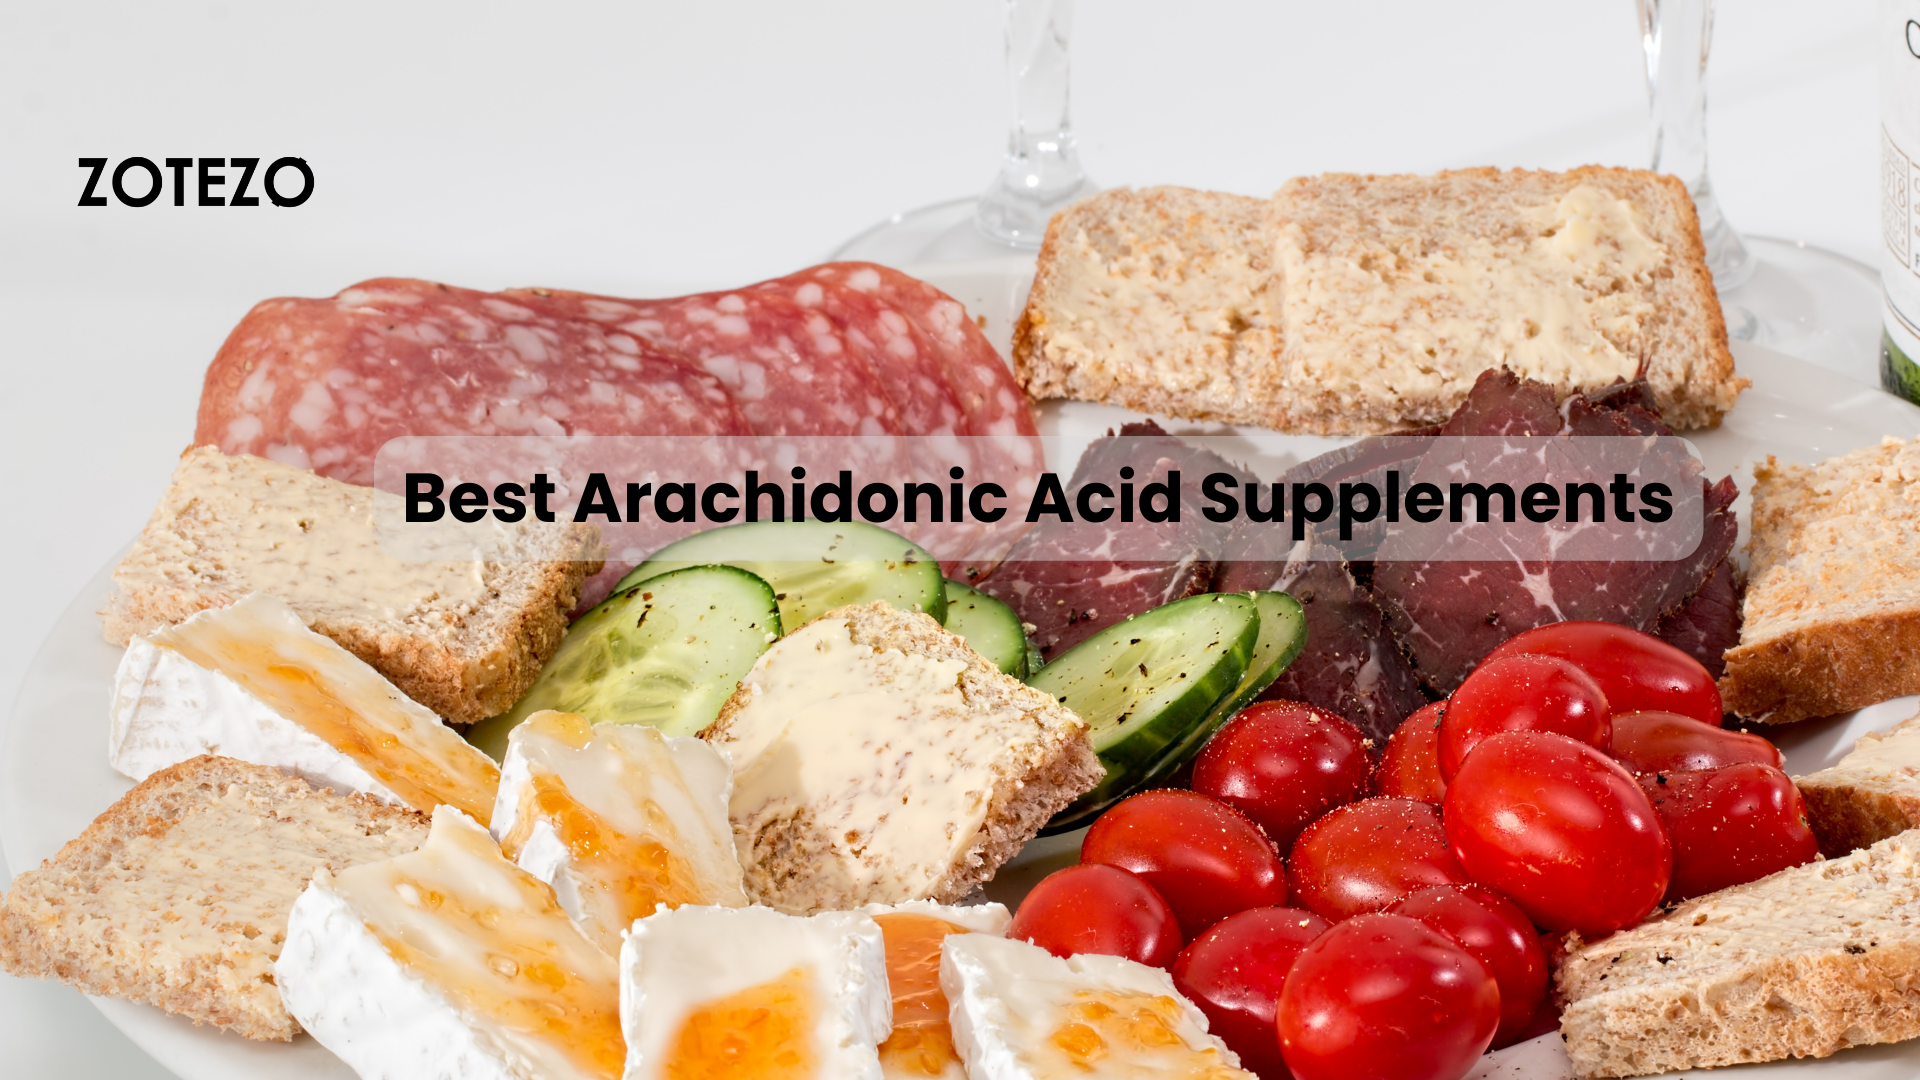 Arachidonic Acid Supplements in USA